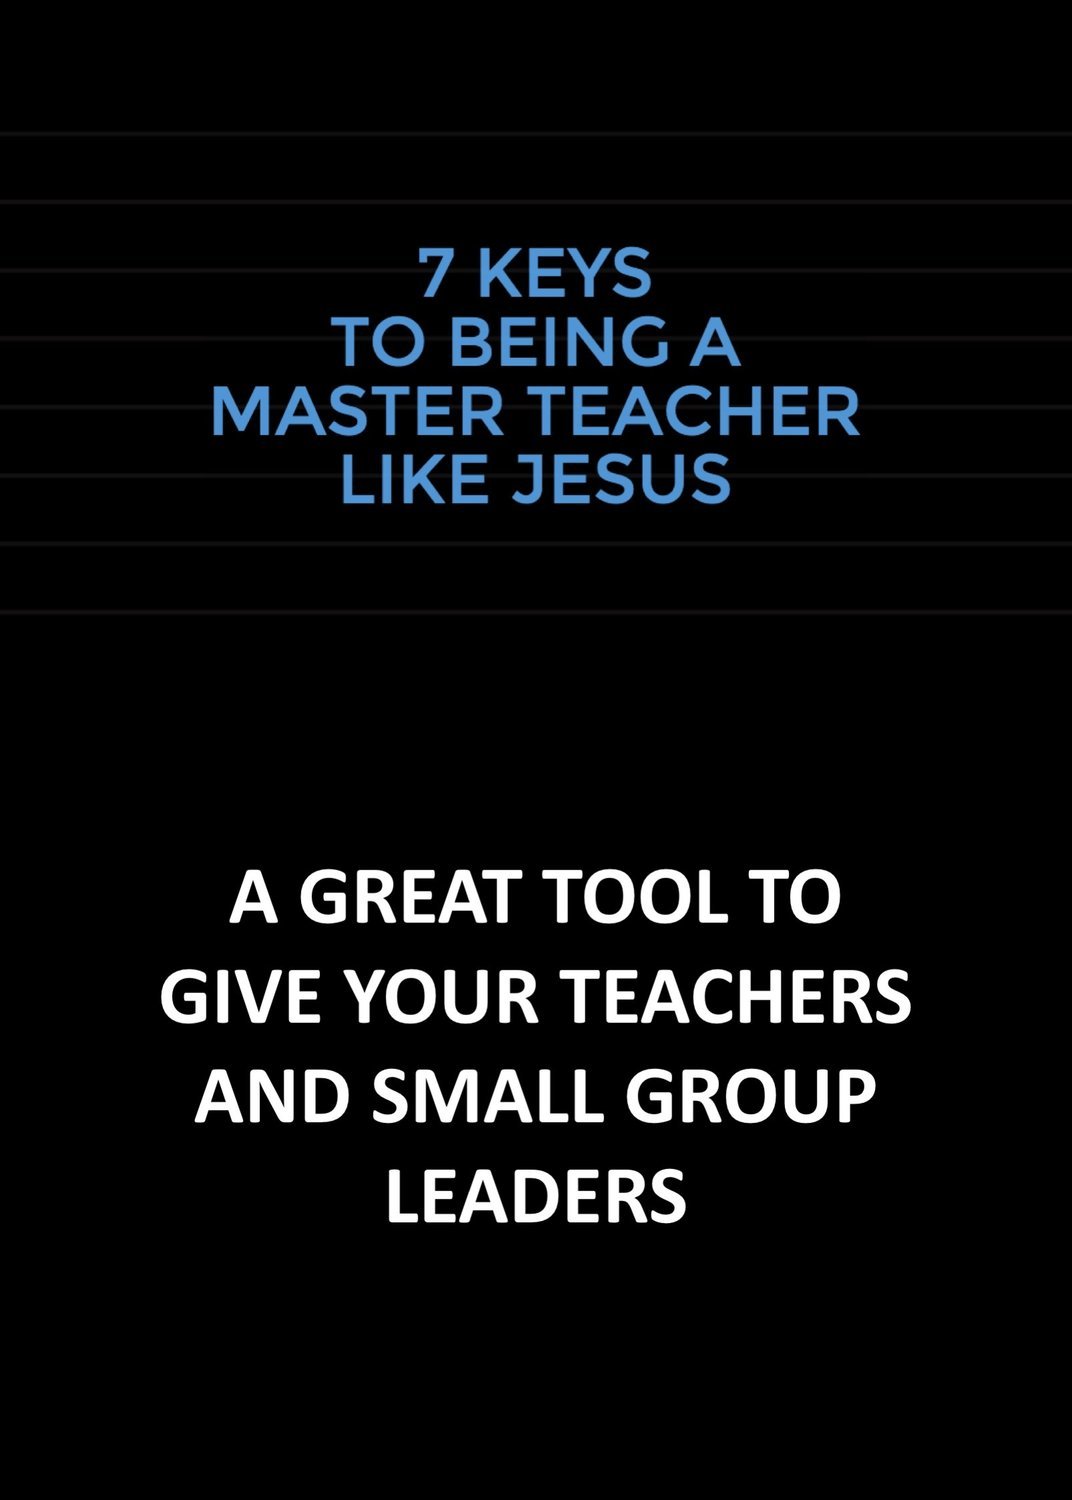 7 Keys to Being a Master Teacher Like Jesus